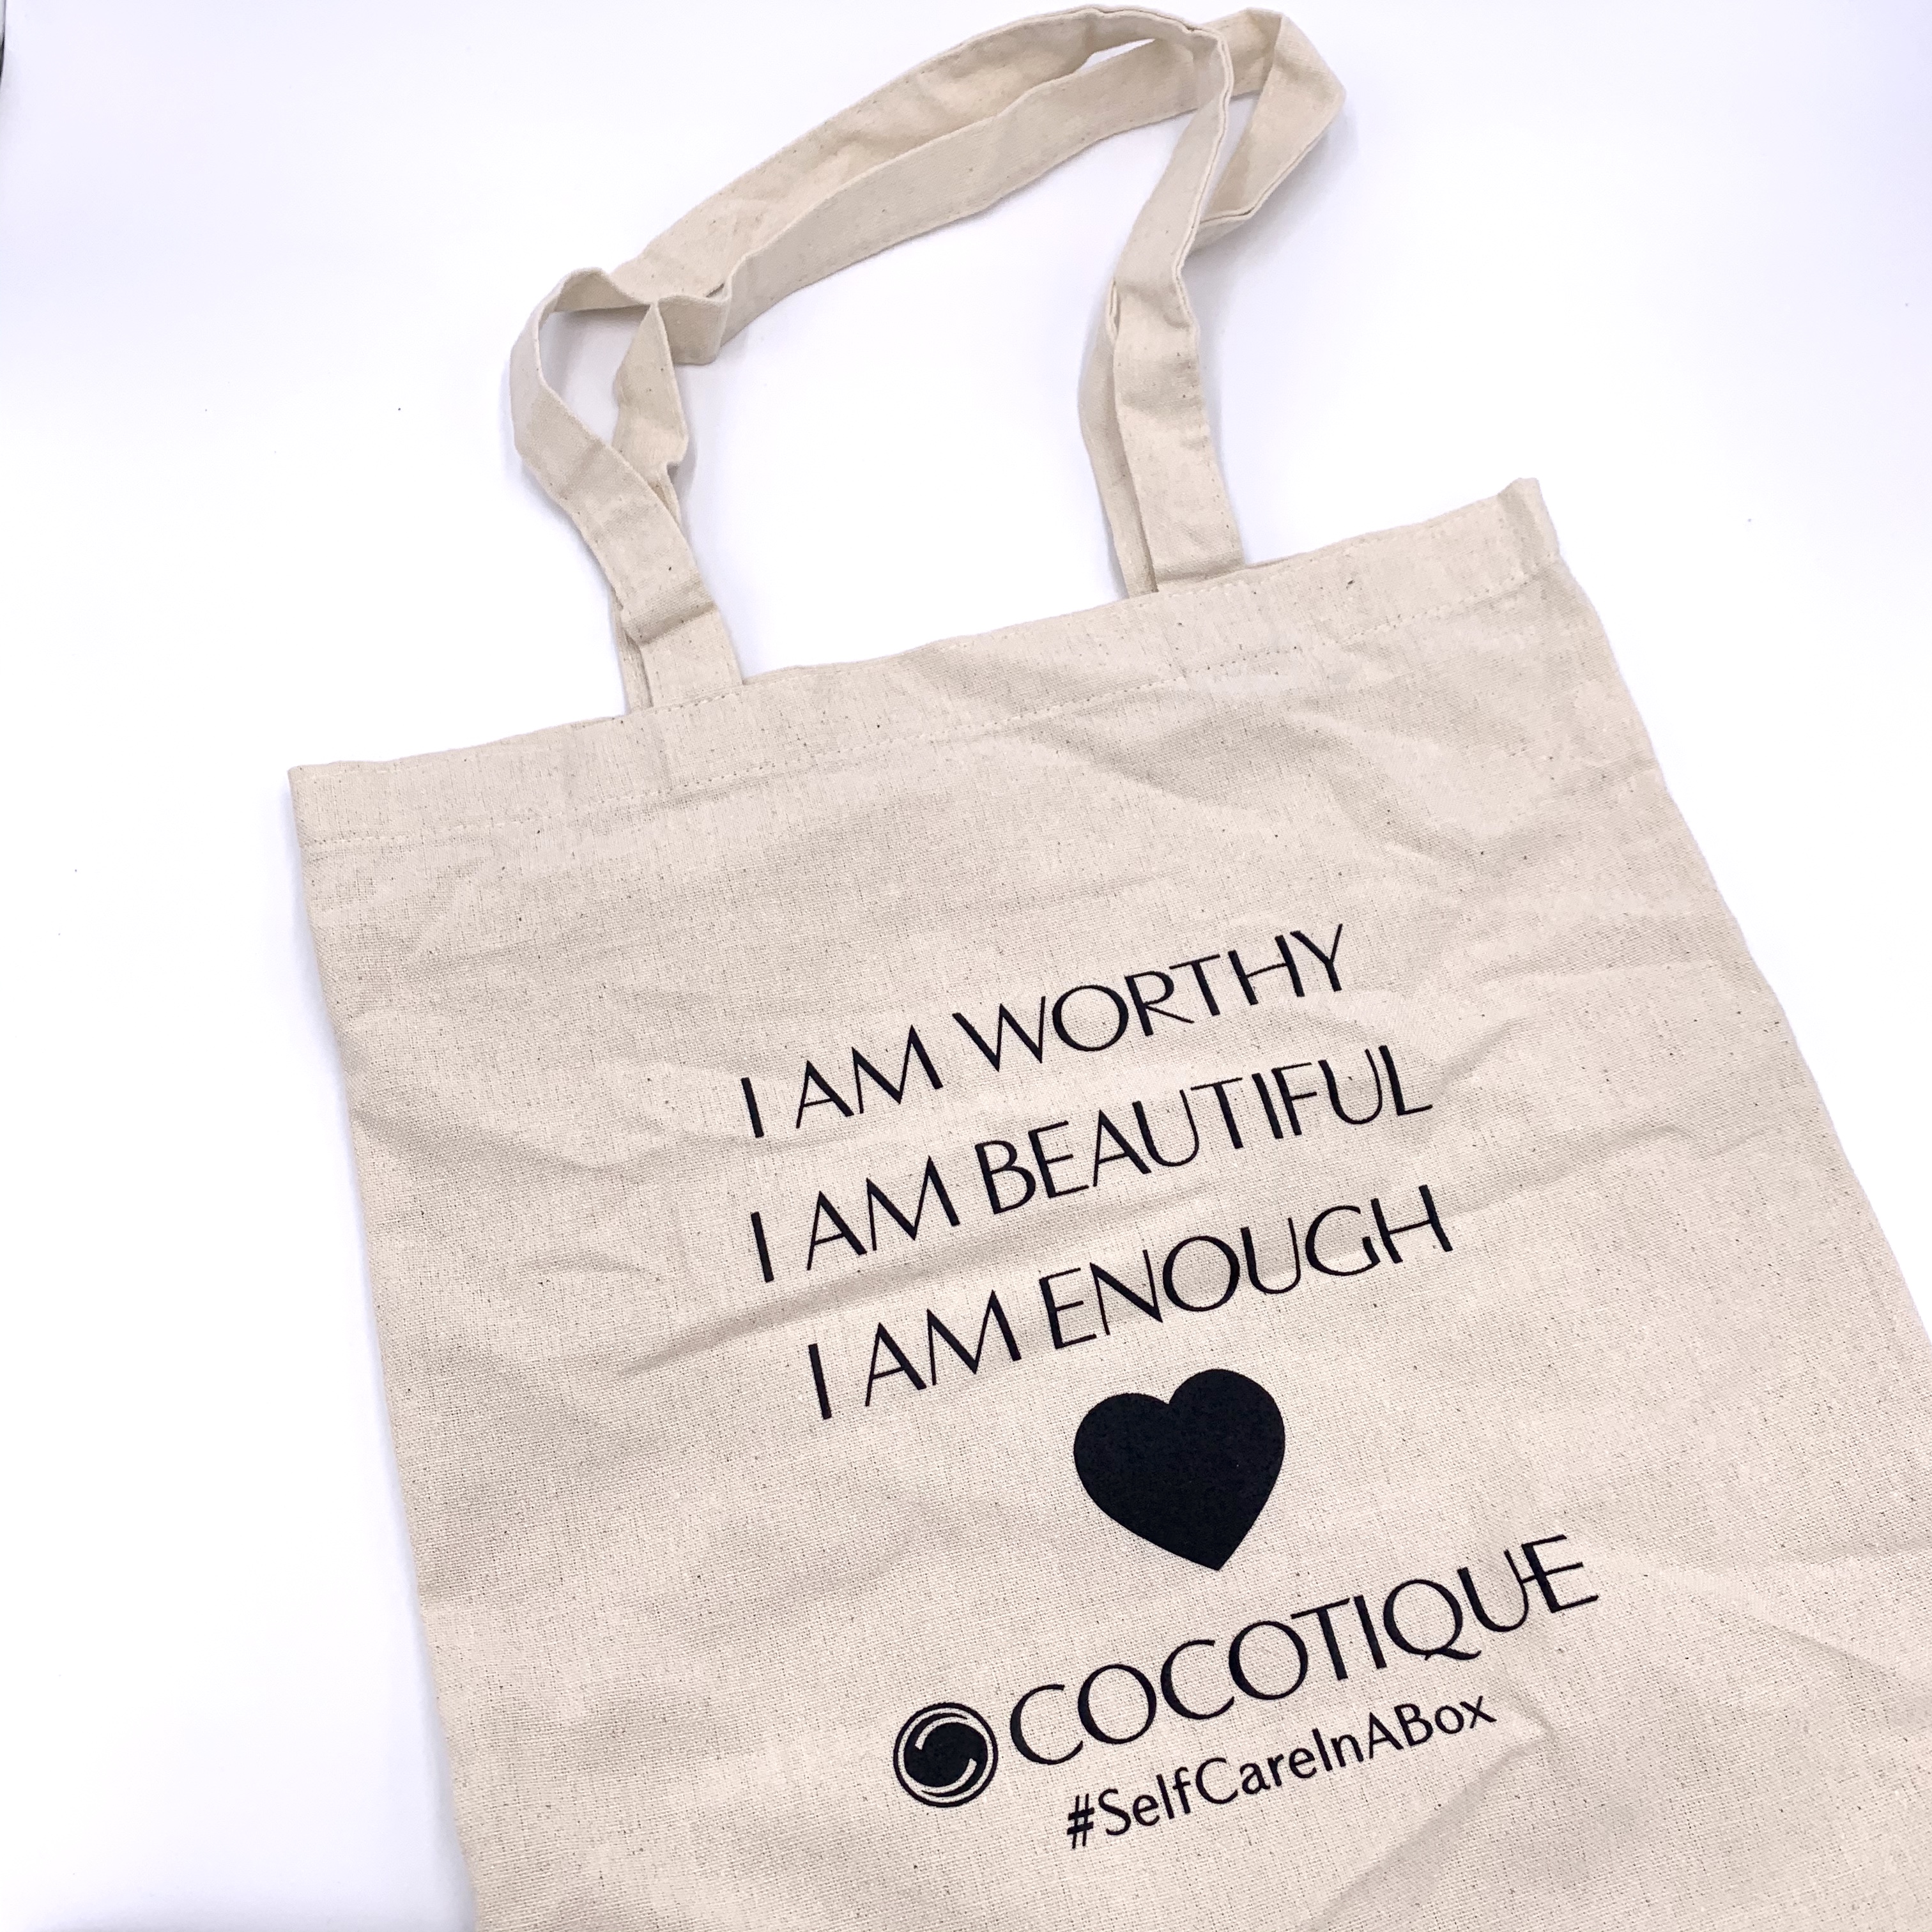 Bag for Cocotique July 2020